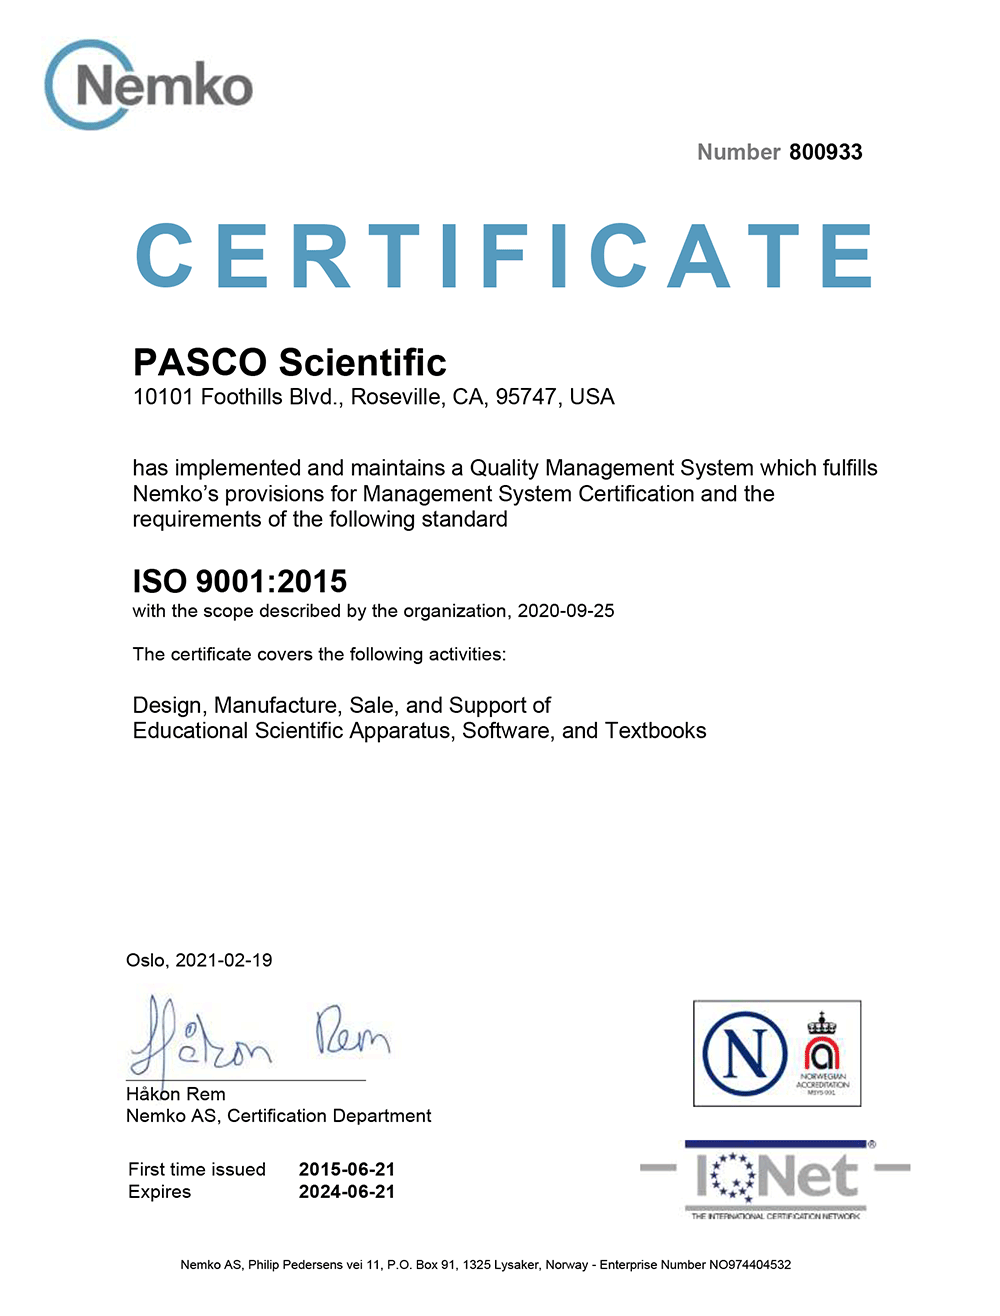 Nemko Certificate